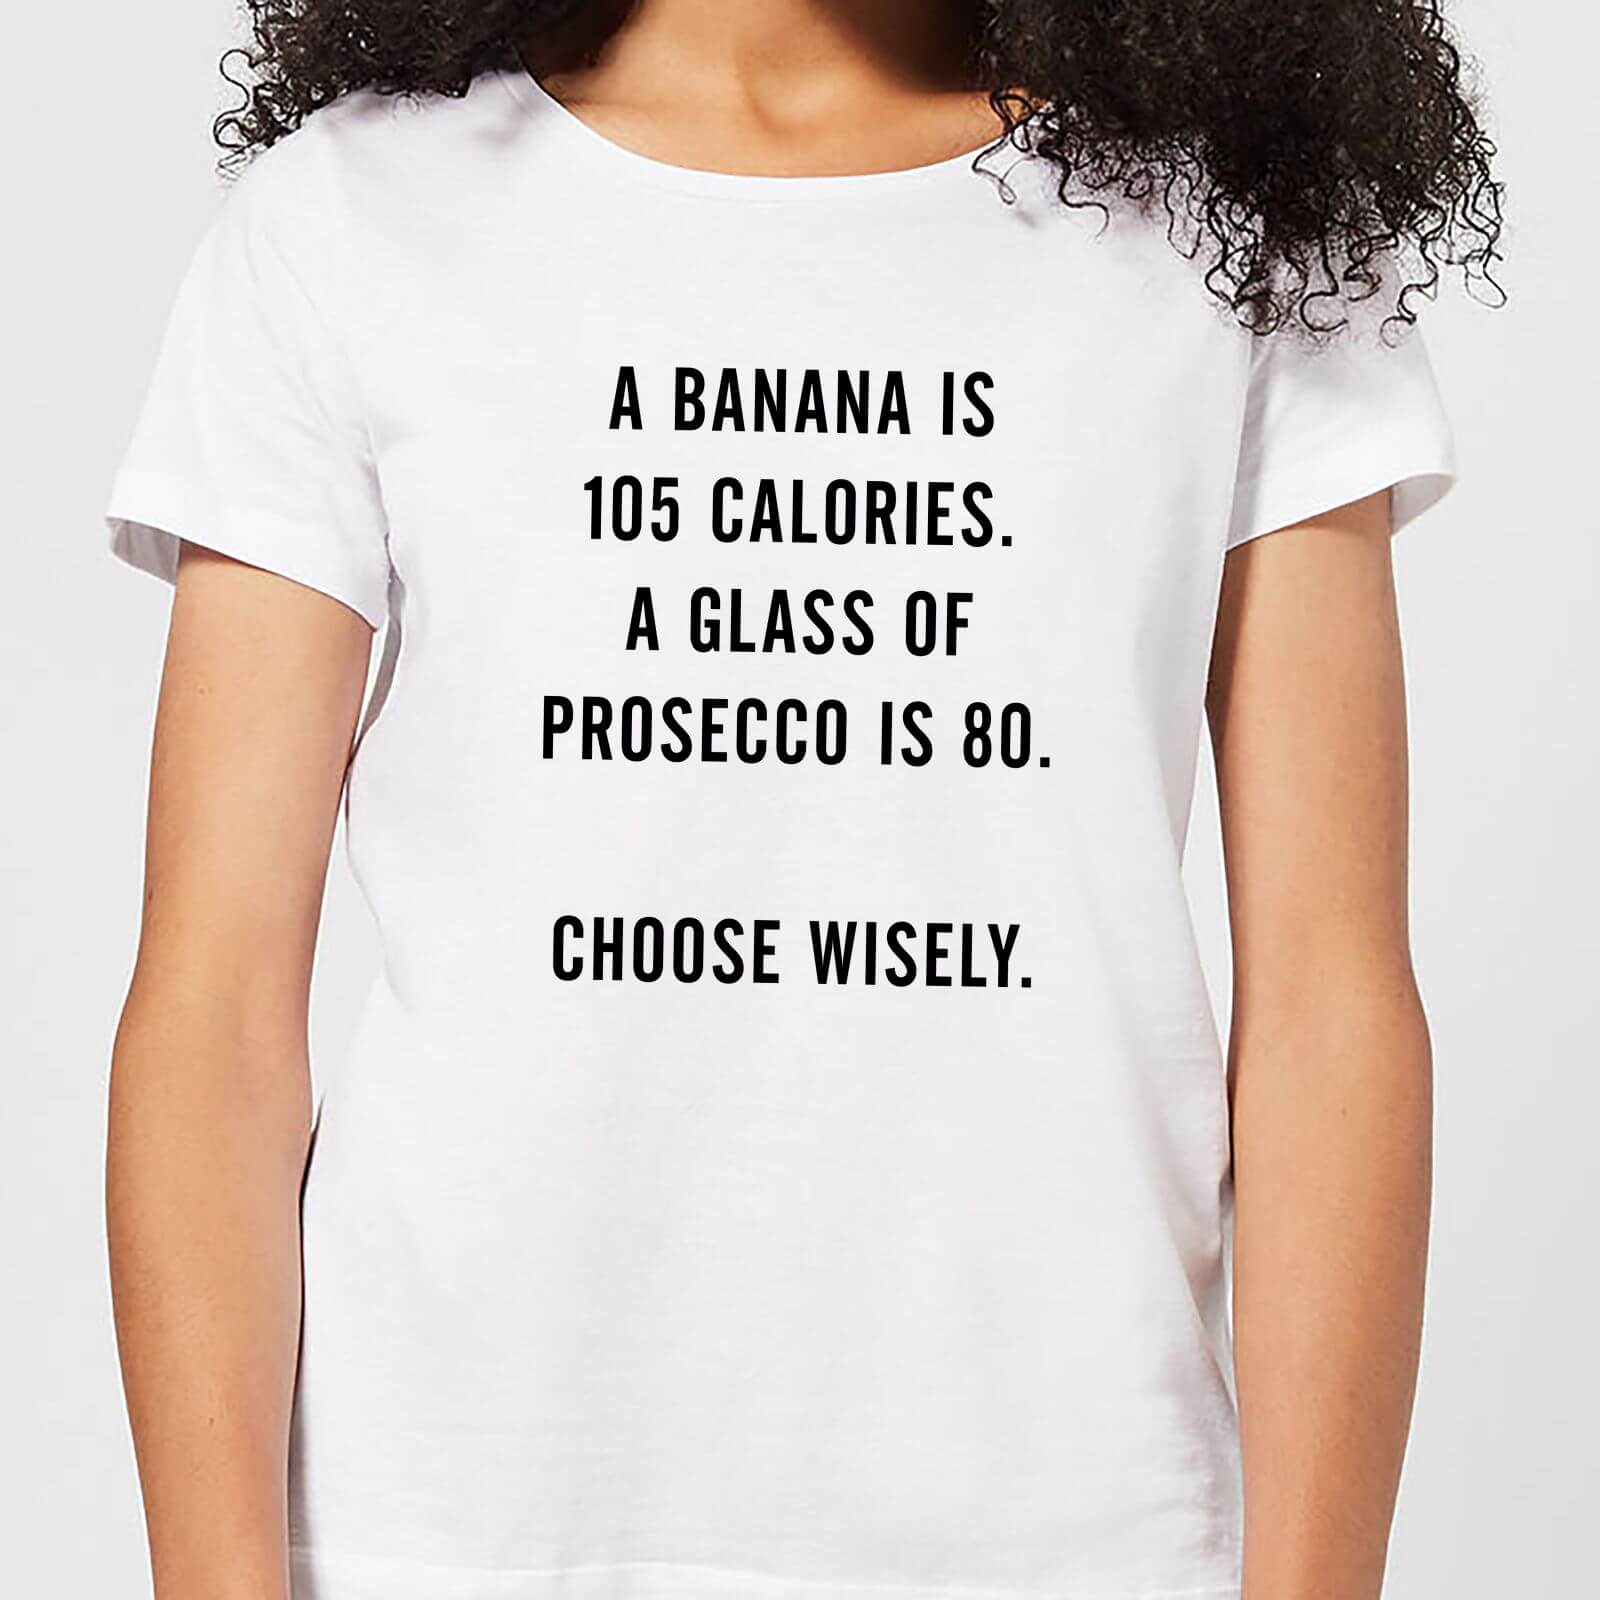 A Banana Is 105 Calories Womens T-Shirt - White - S - White